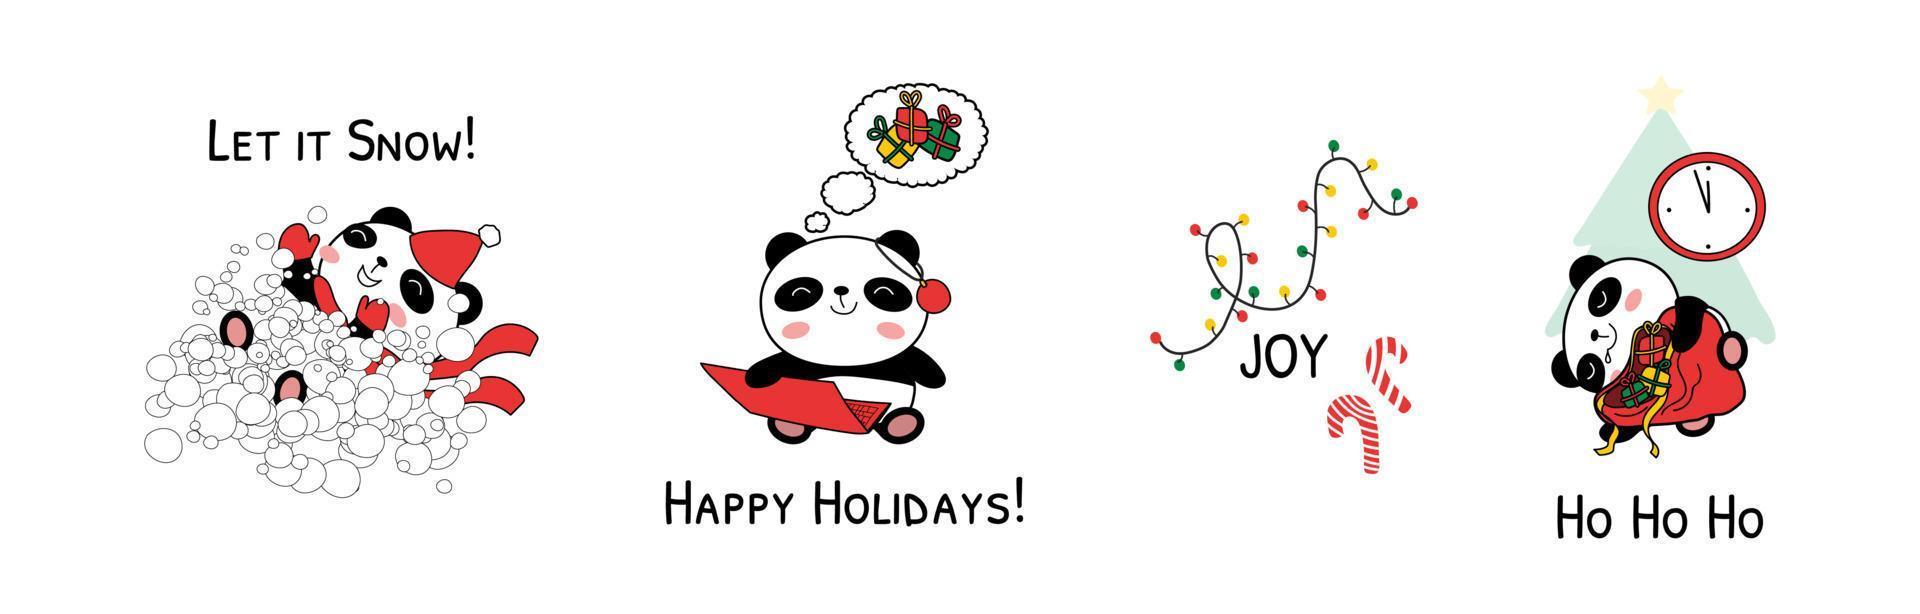 Christmas baby pandas vector illustration isolated on white background